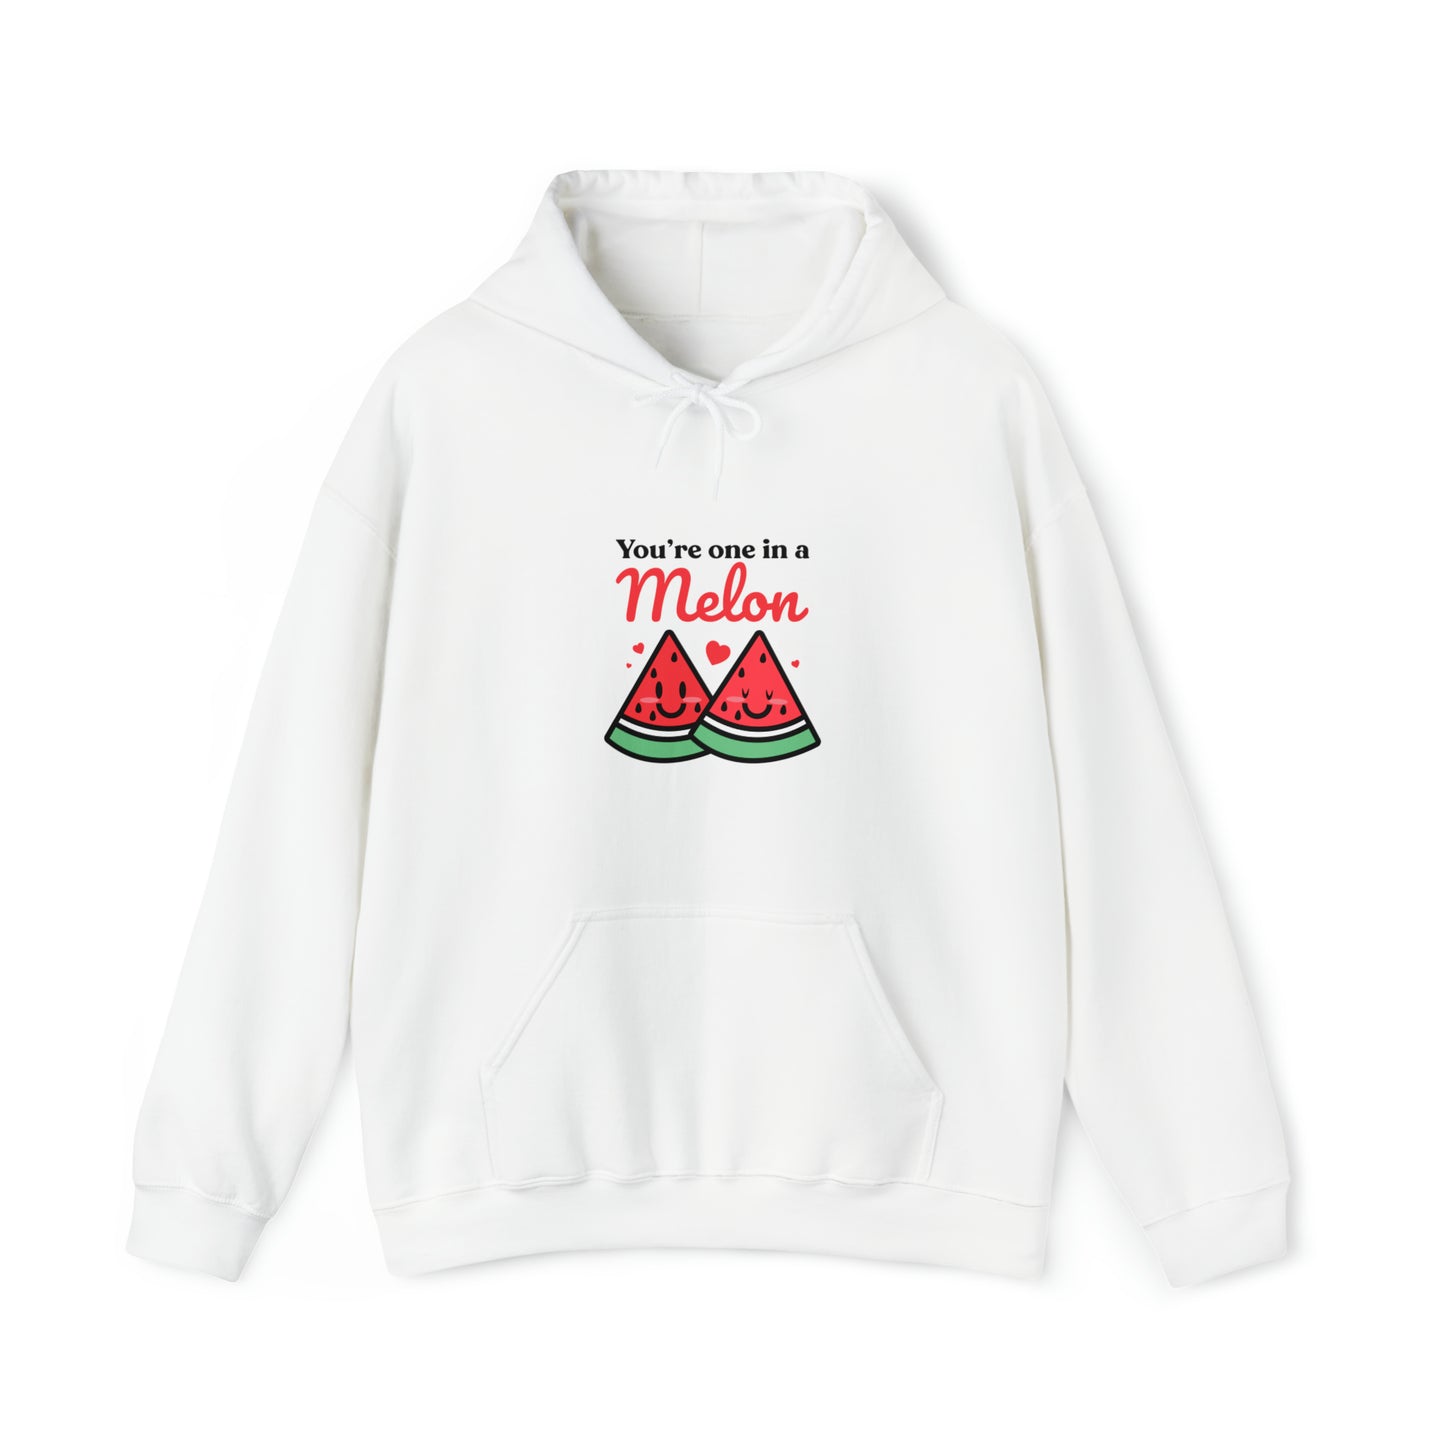 Custom Parody Hooded Sweatshirt, You're one in a Melon design